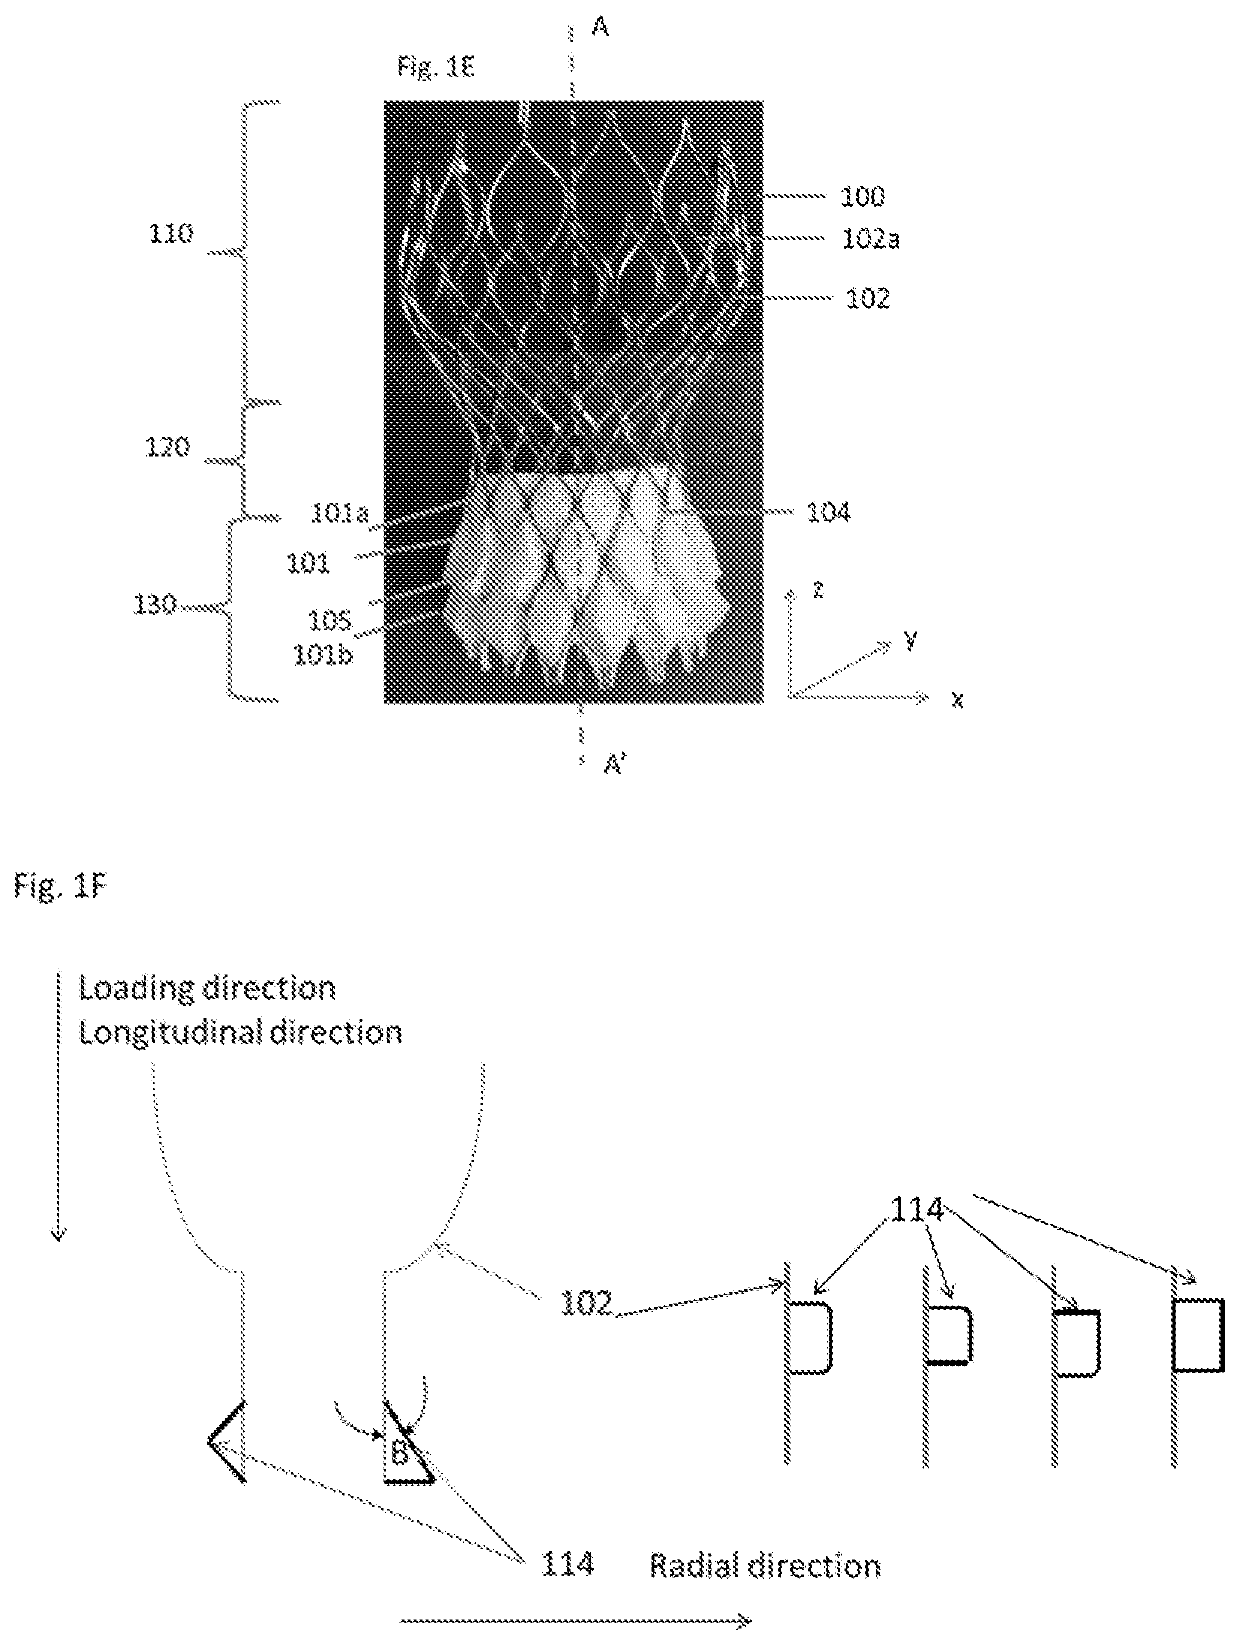 Expandable sealing skirt technology for leak-proof endovascular prostheses